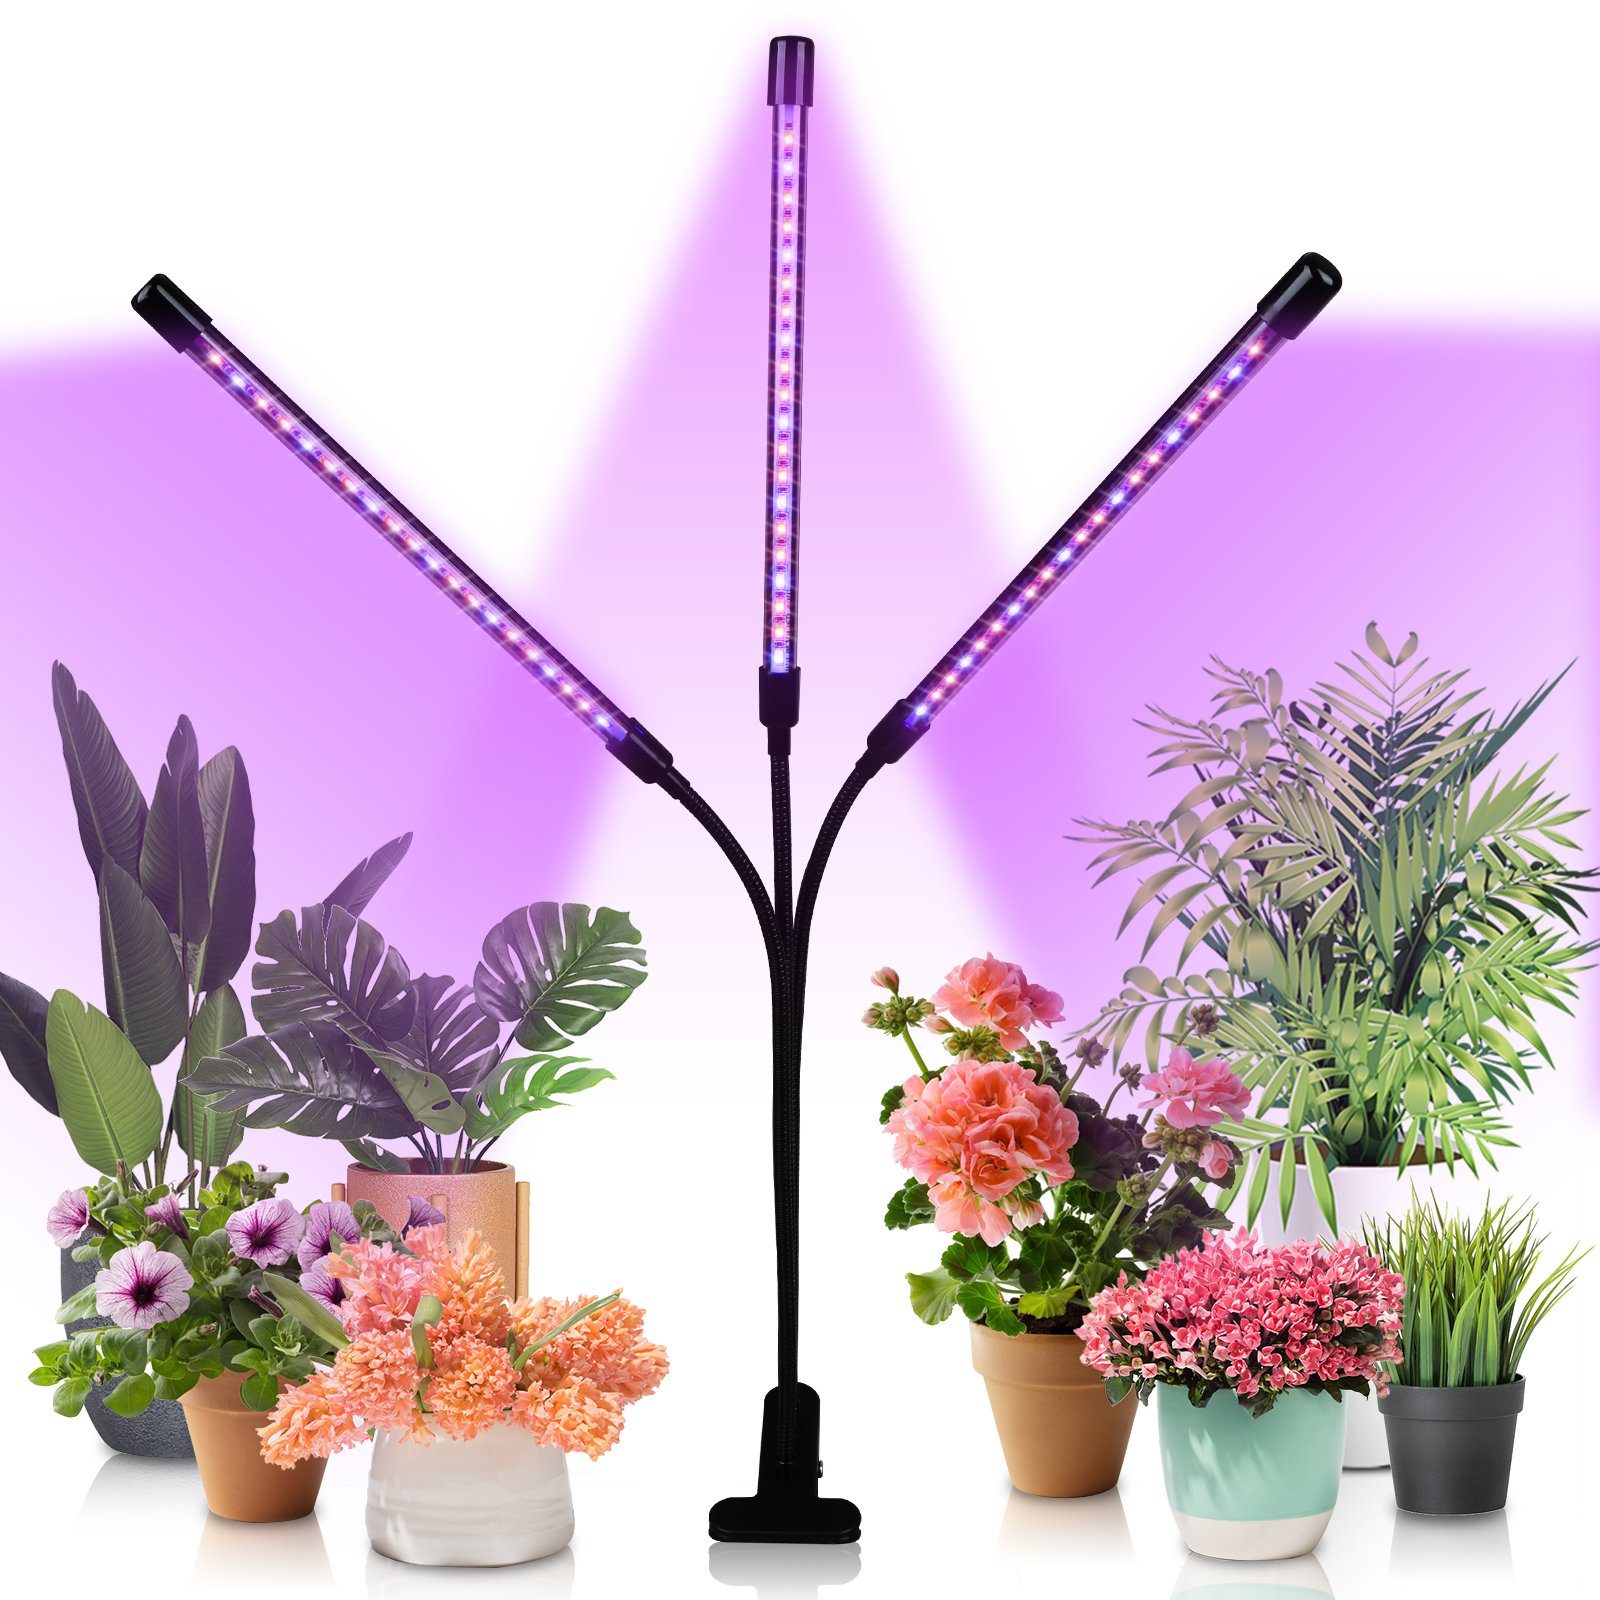 Regulärer Rabatt Lospitch Pflanzenlampe 3 Dimmbar Pflanzenlicht Kopf Vollspektrum LED 30W Wachstumslampe